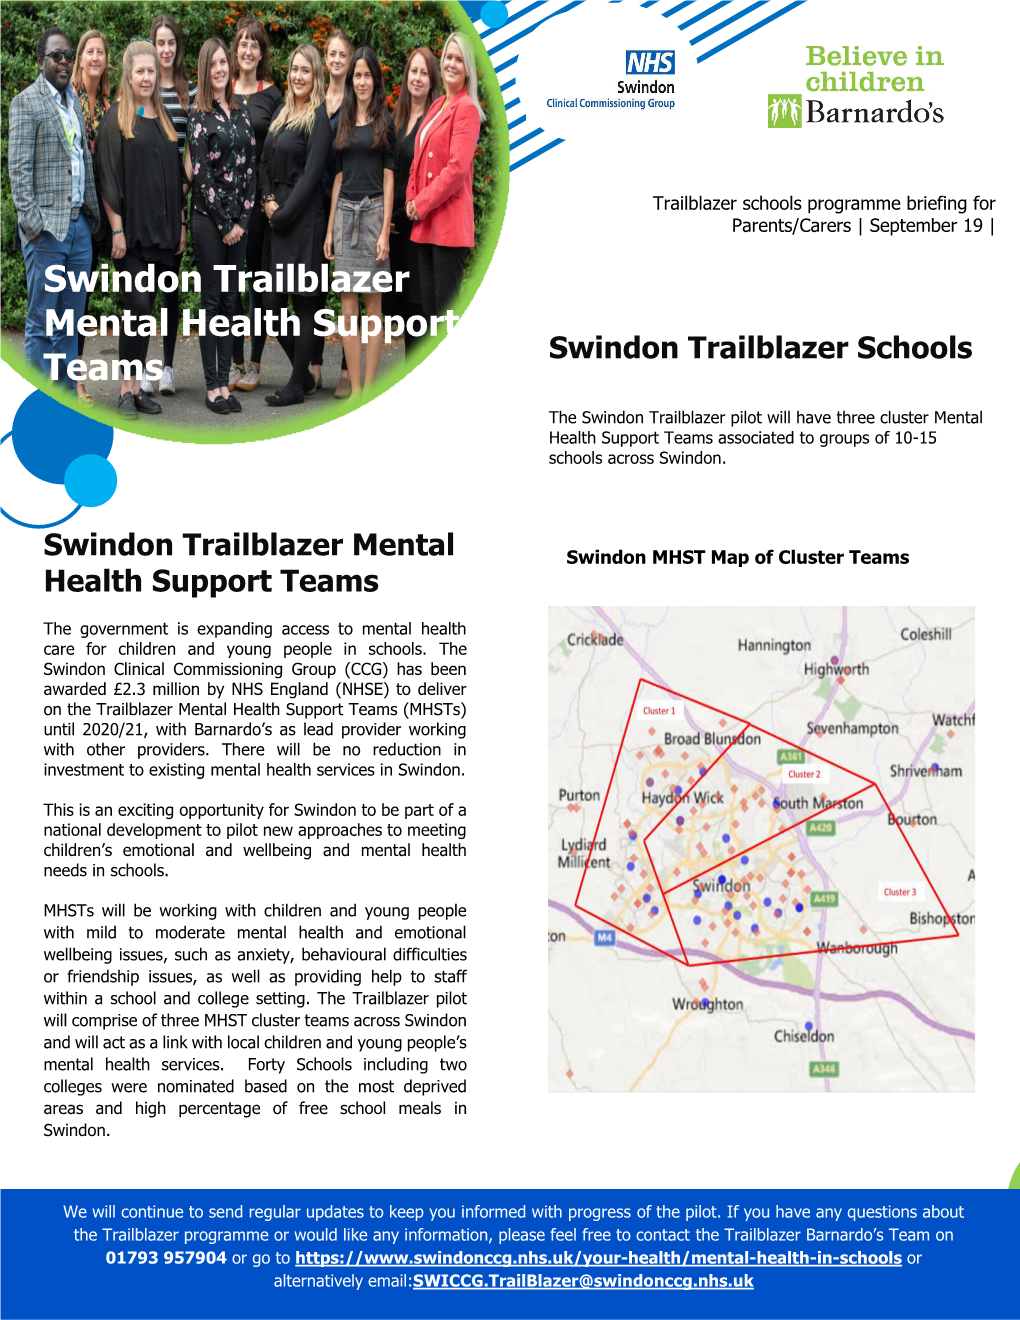 Swindon Trailblazer Mental Health Support Teams